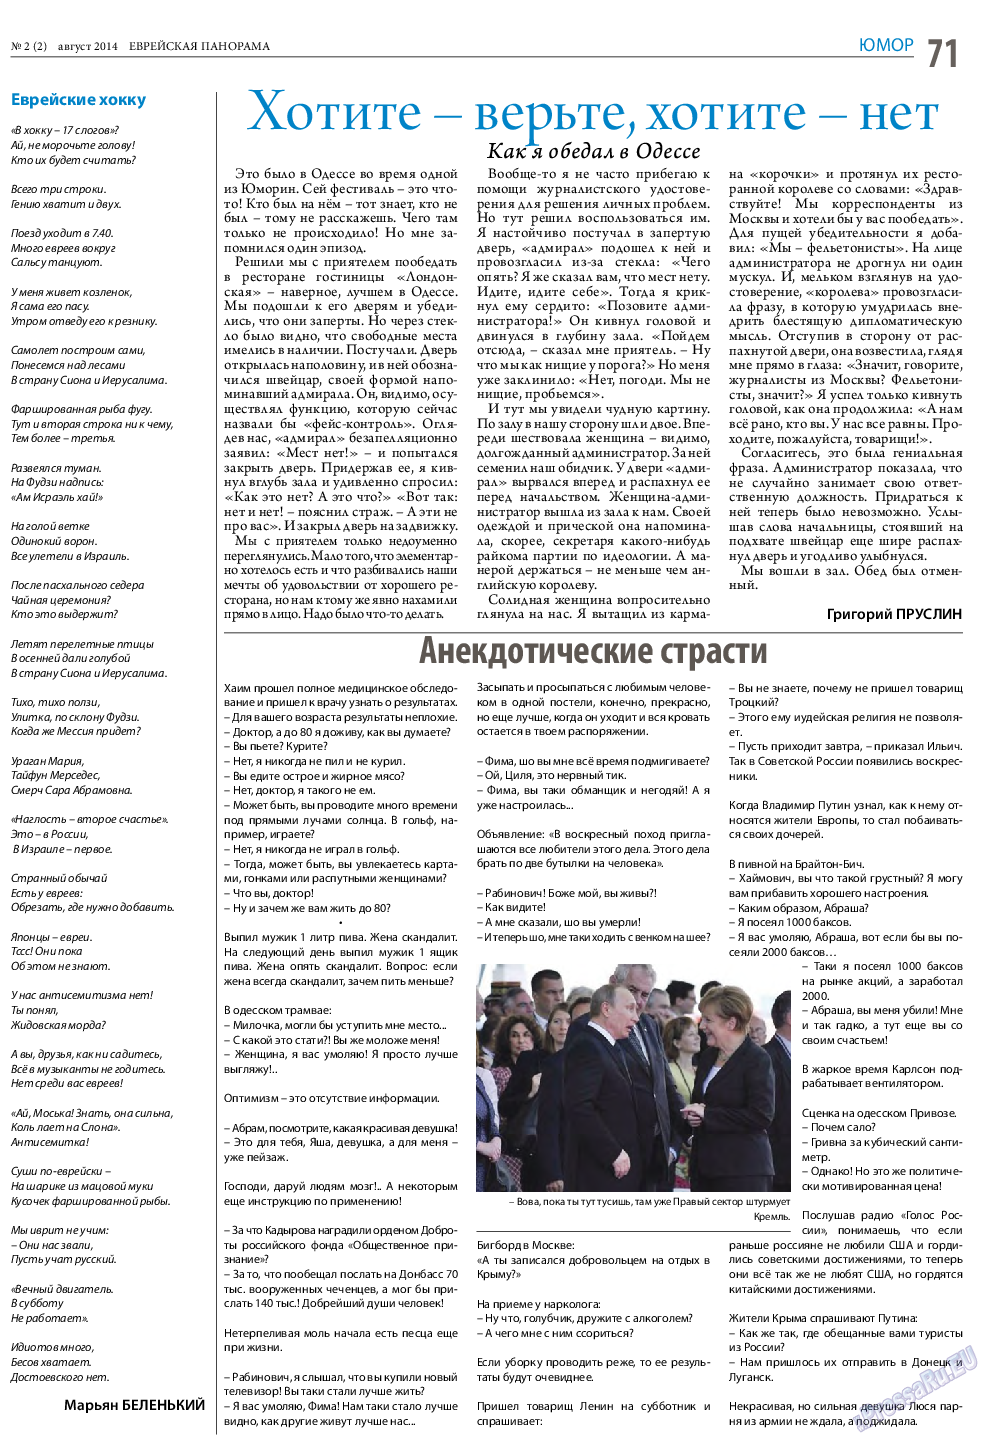 Еврейская панорама, газета. 2014 №2 стр.71